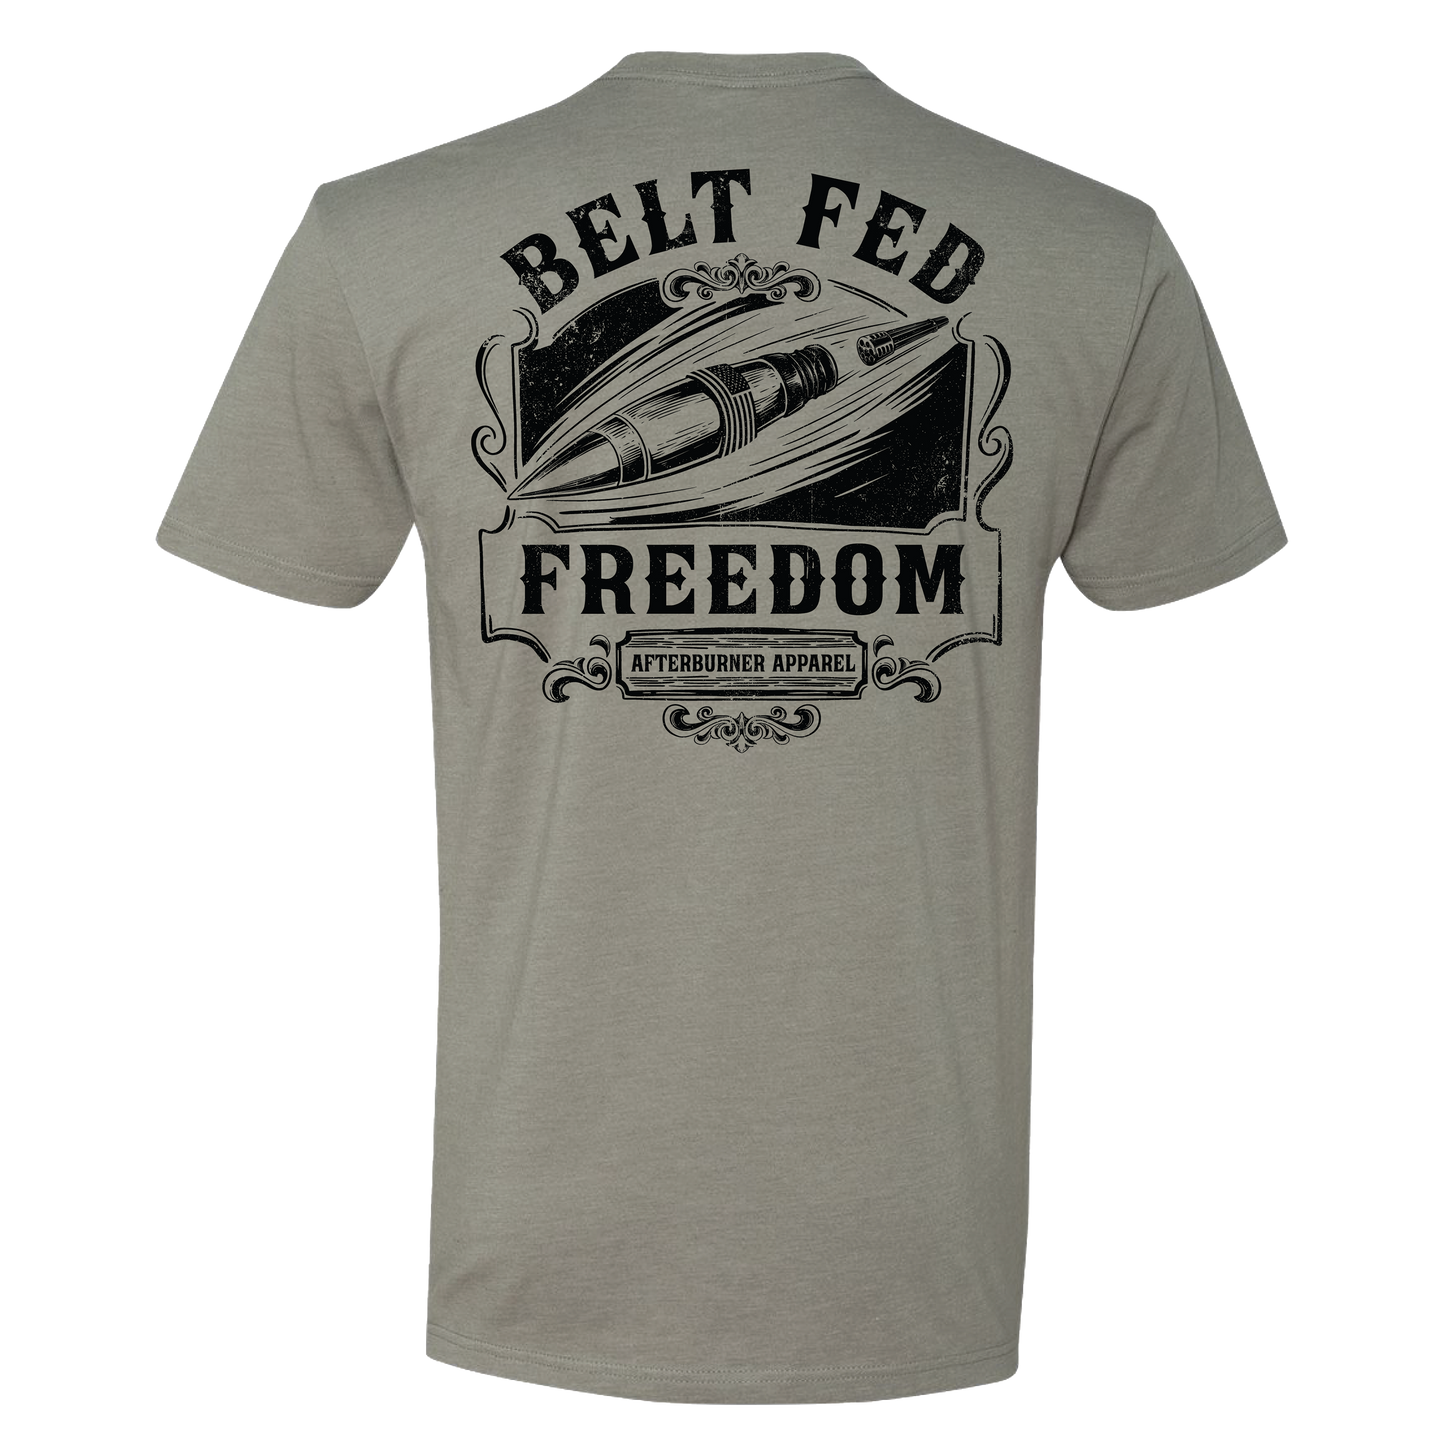 Belt Fed Freedom Tee